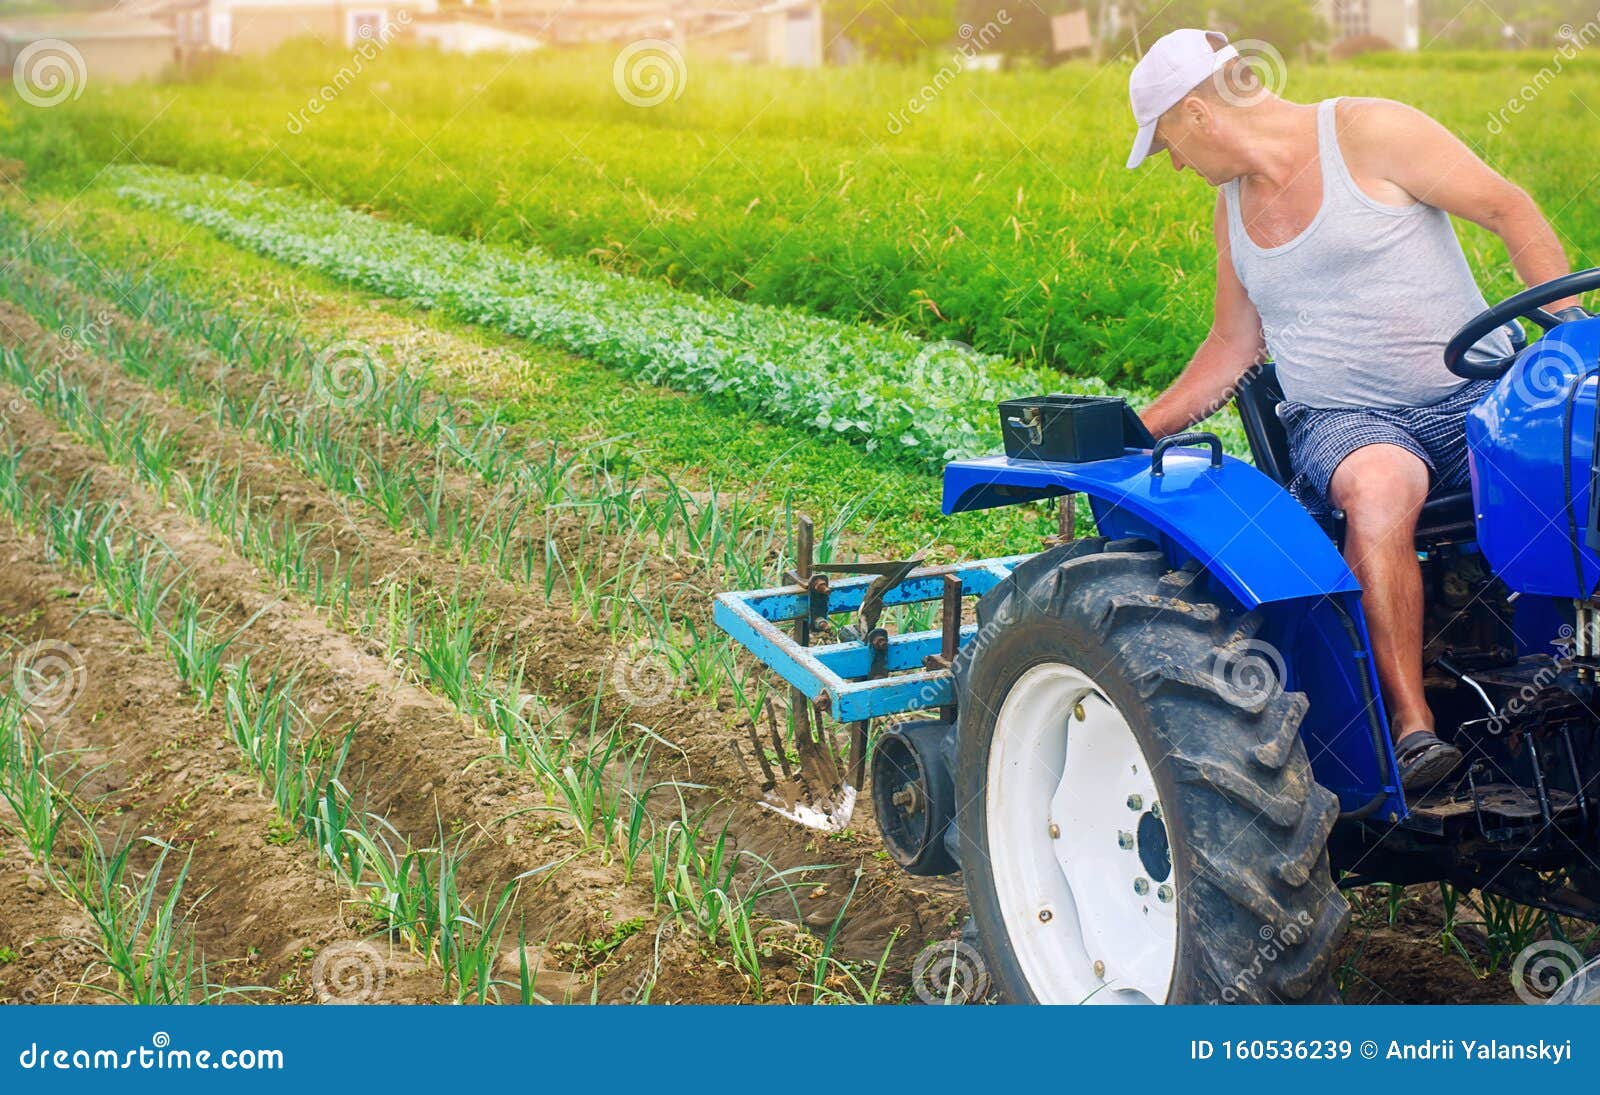 a farmer on a tractor plows a field. vegetable rows of leeks. plowing field. seasonal farm work. agriculture crops. farming,